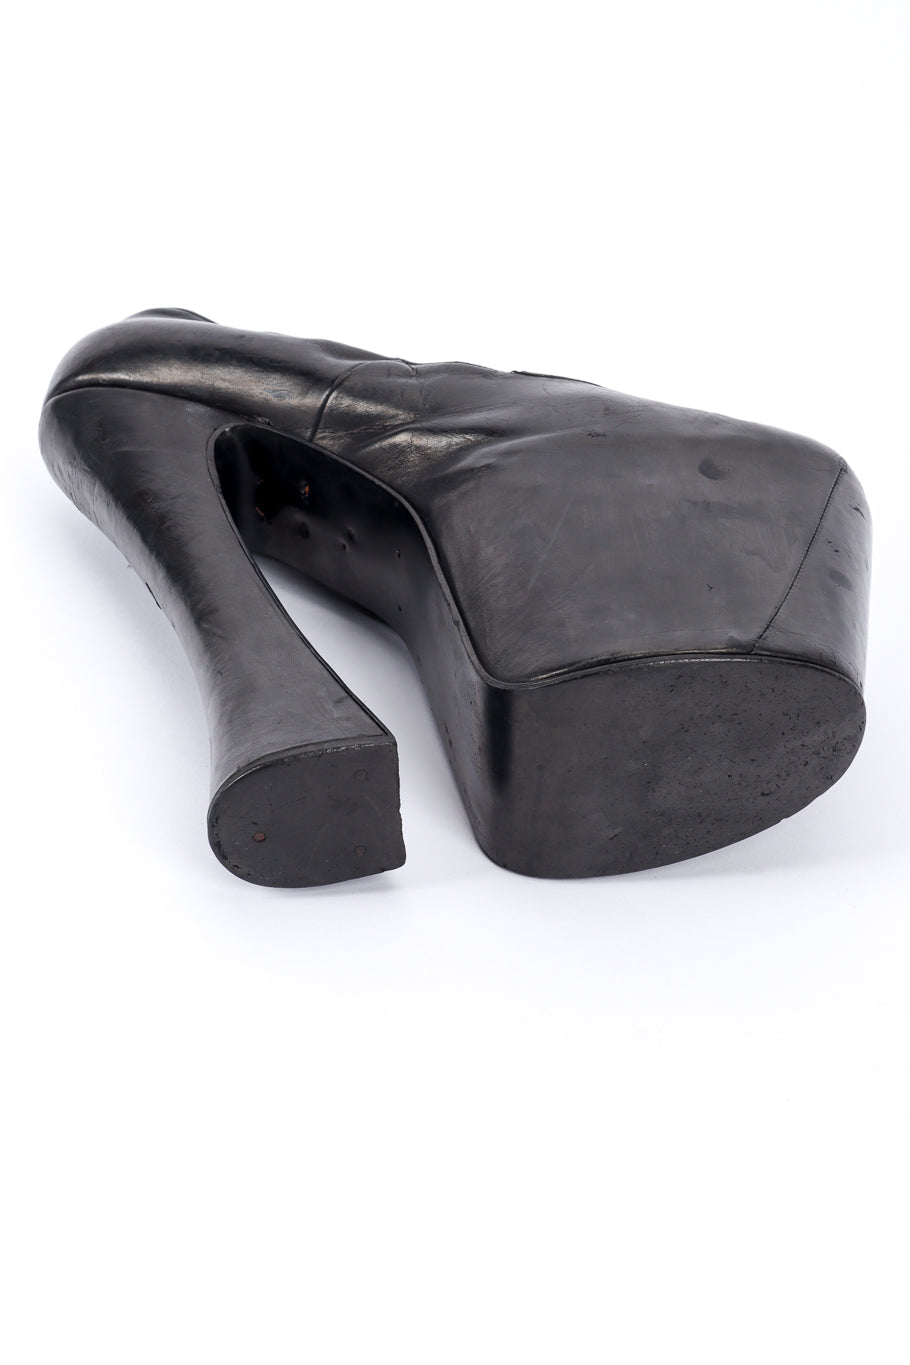 Vintage Vivienne Westwood 1993 F/W Super Elevated Leather Court Shoe left outsole @recessla